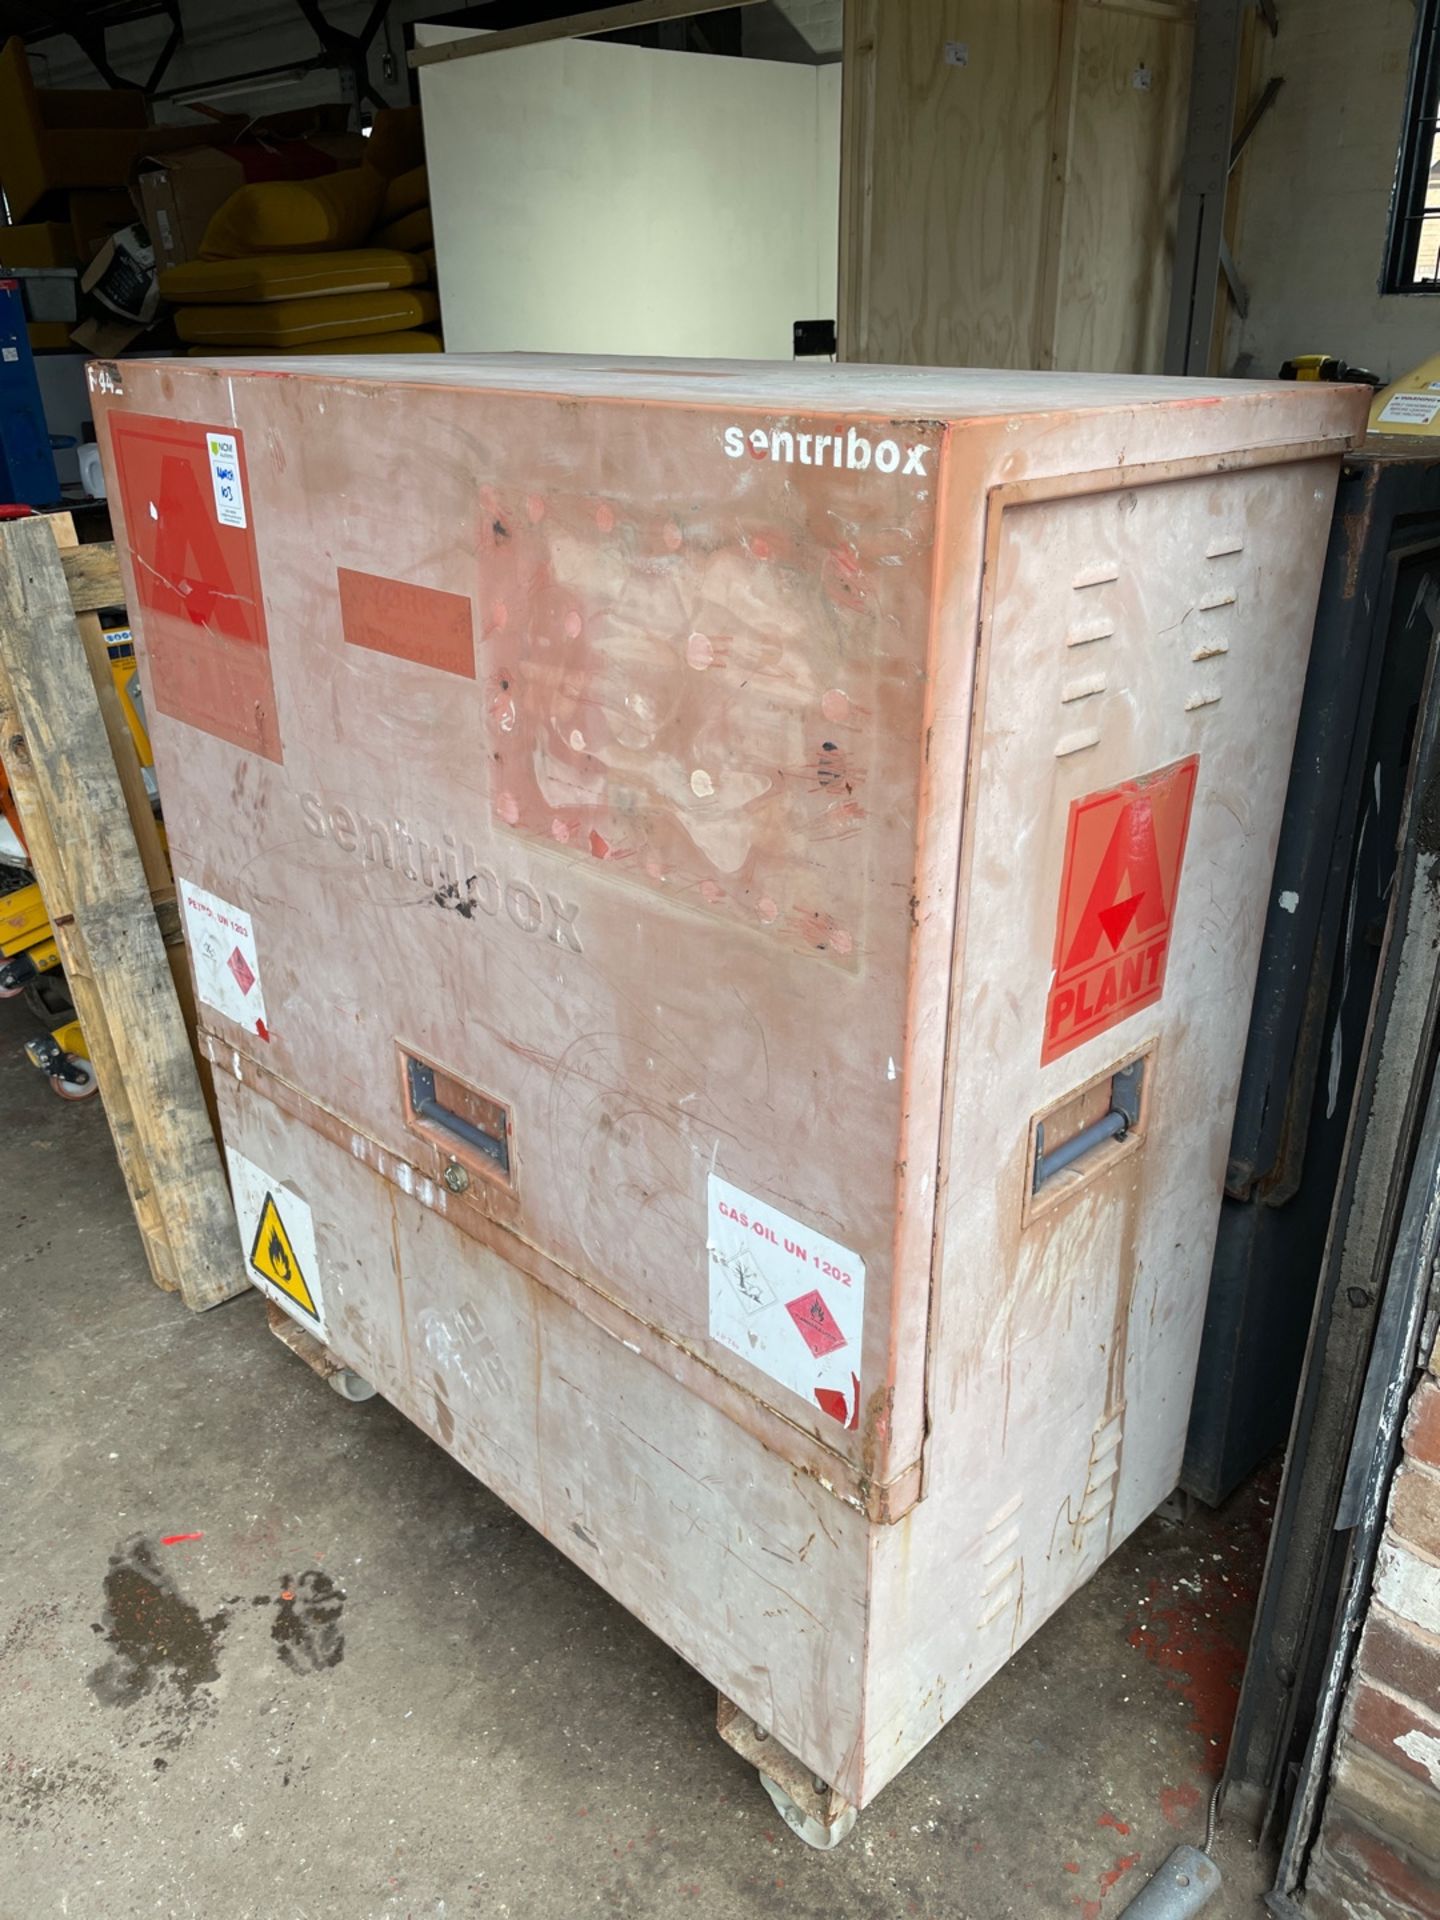 Sentribox Steel Lockable Mobile Storage Box - Image 2 of 3